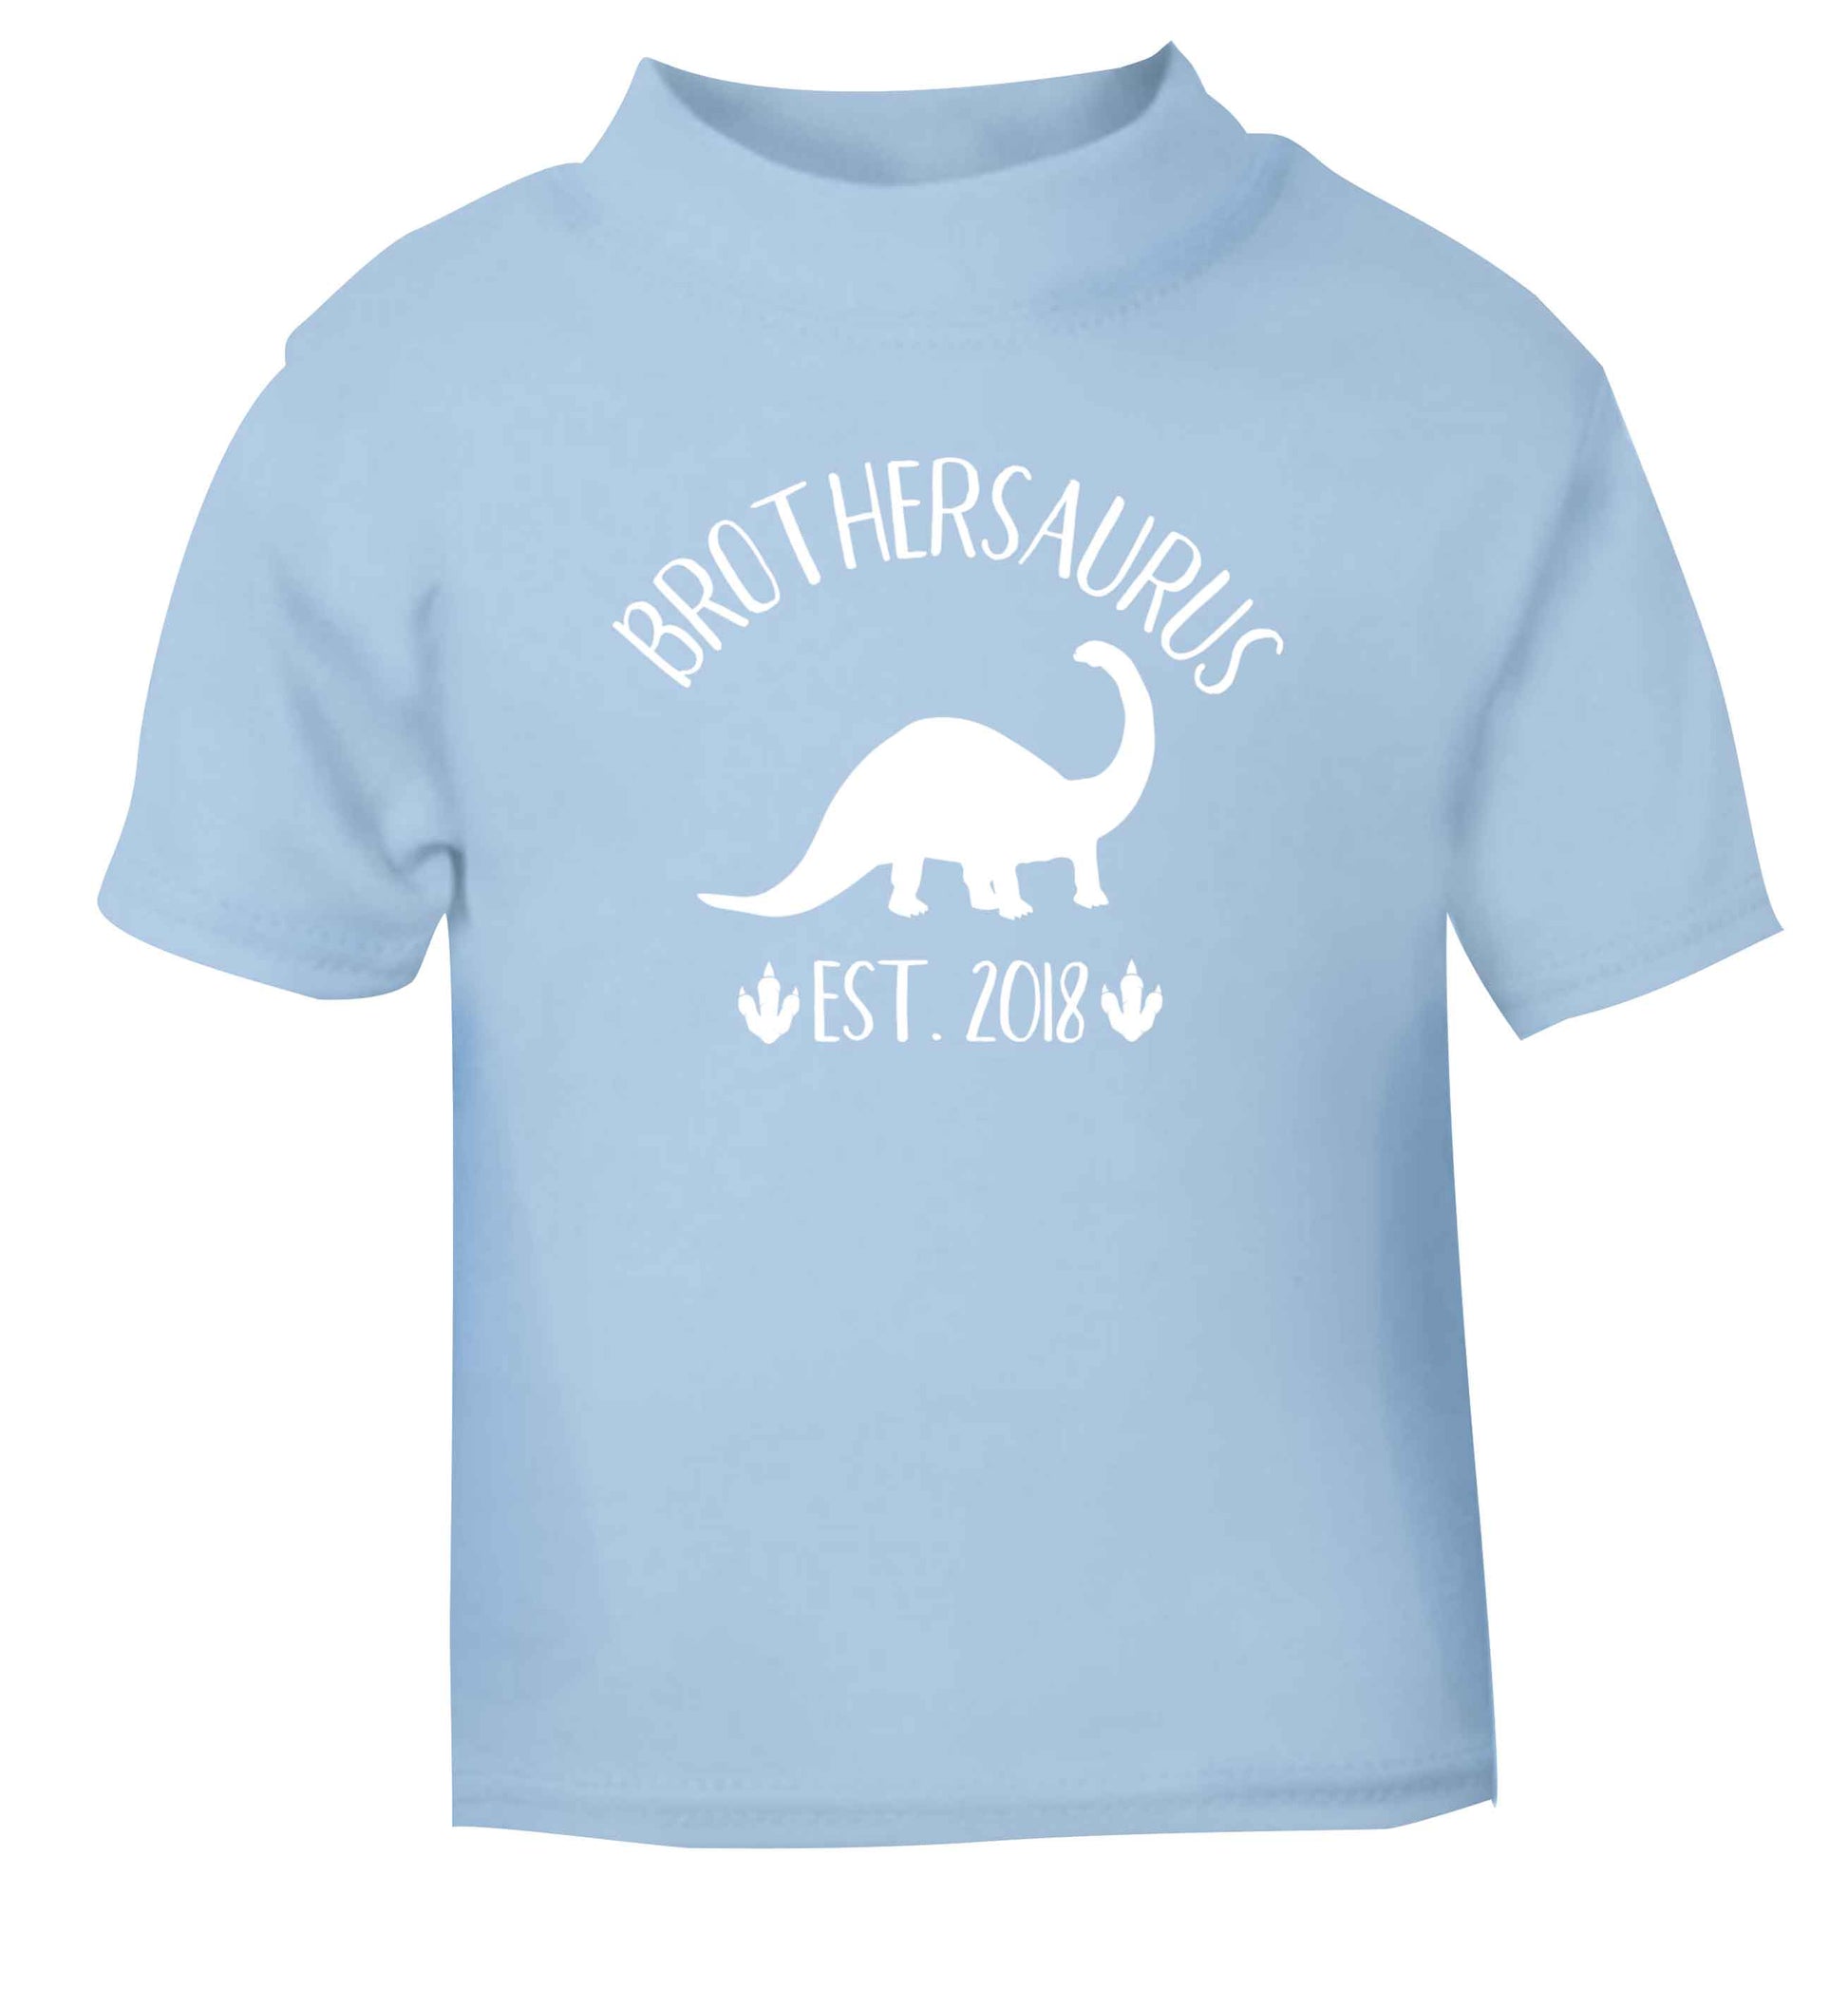 Personalised brothersaurus since (custom date) light blue Baby Toddler Tshirt 2 Years